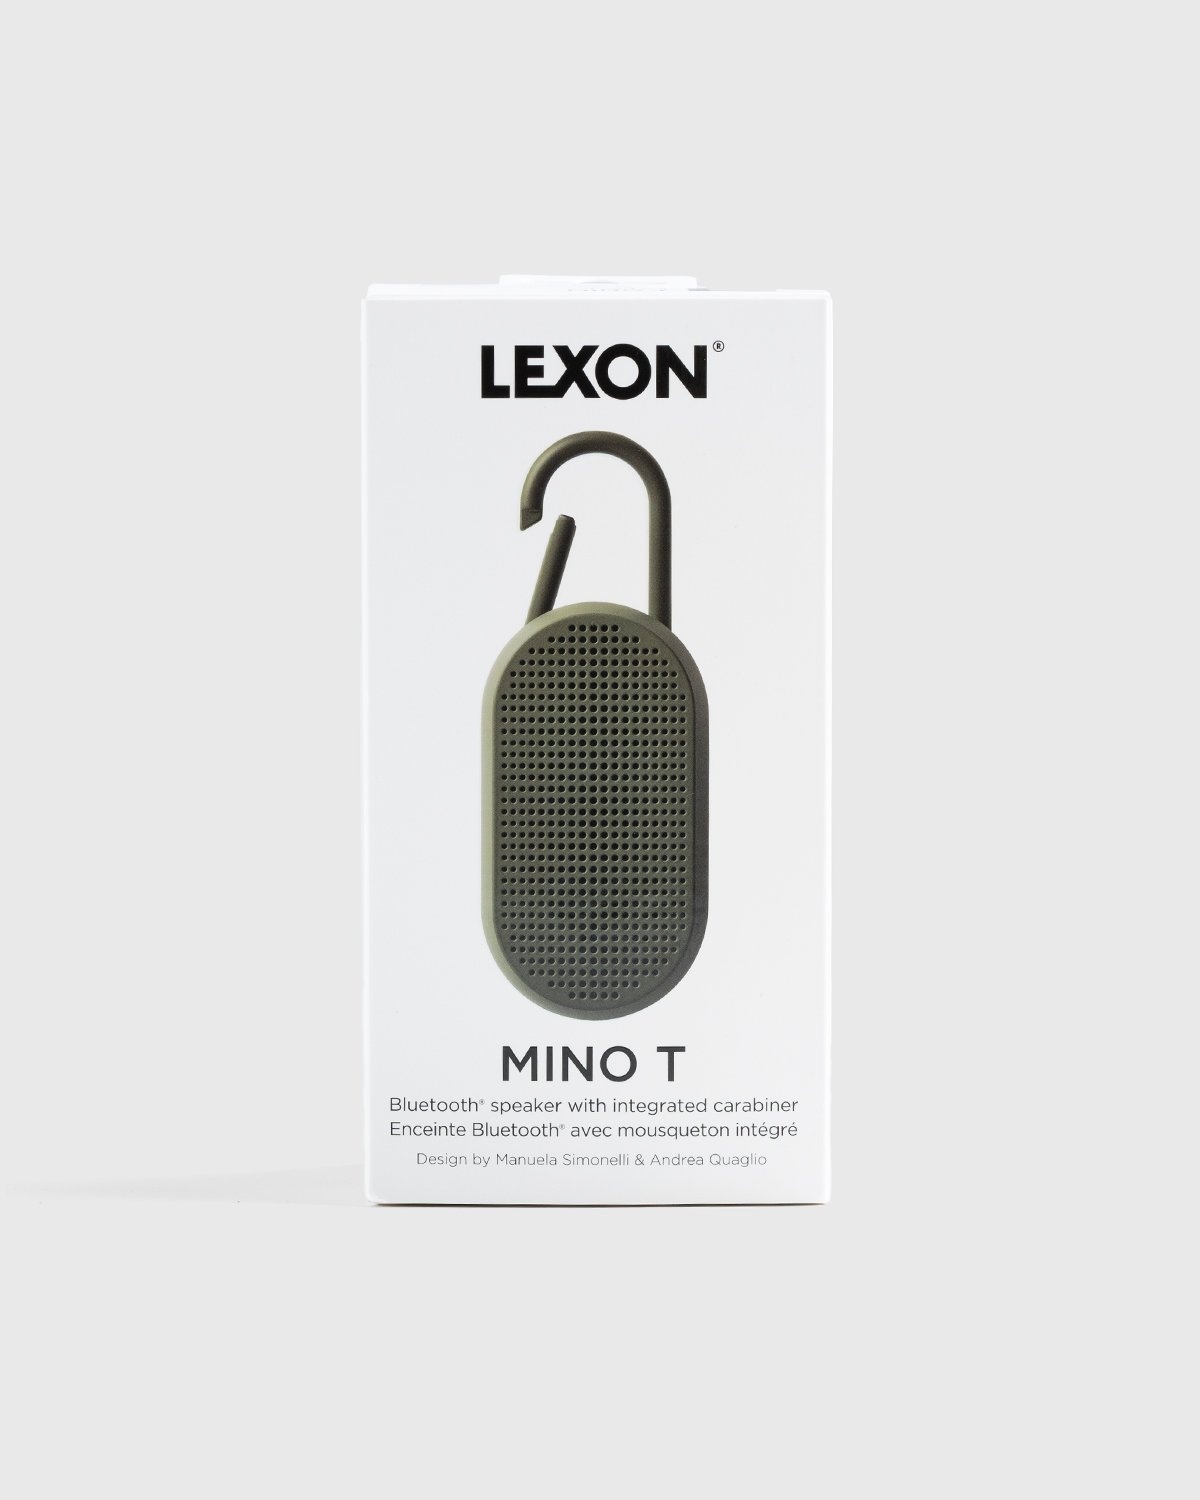 Carhartt WIP – Lexon Mino T Speaker Cypress - Lifestyle - Green - Image 4